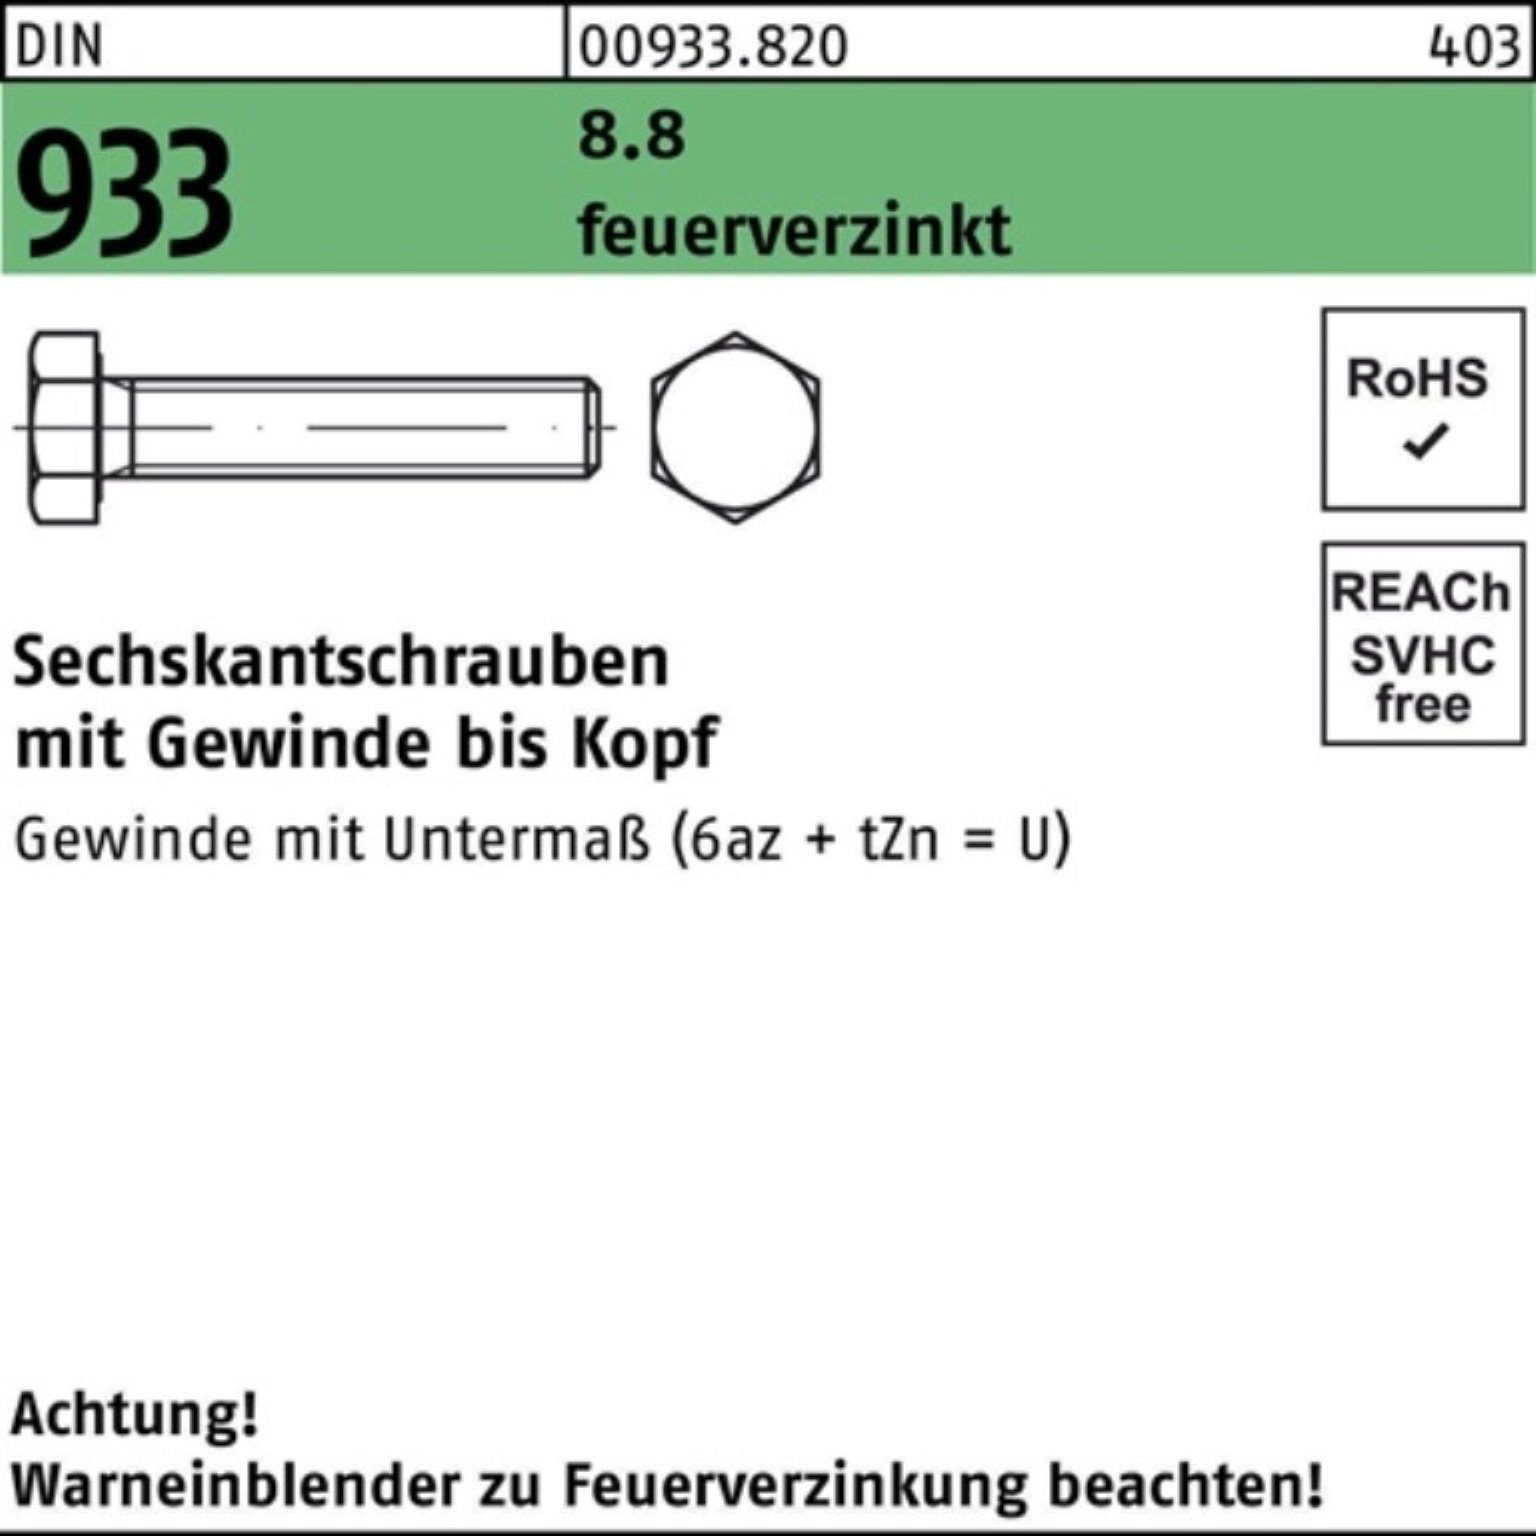 Reyher Pack Sechskantschraube 933 DIN VG feuerverz. St 25 8.8 160 M16x Sechskantschraube 100er